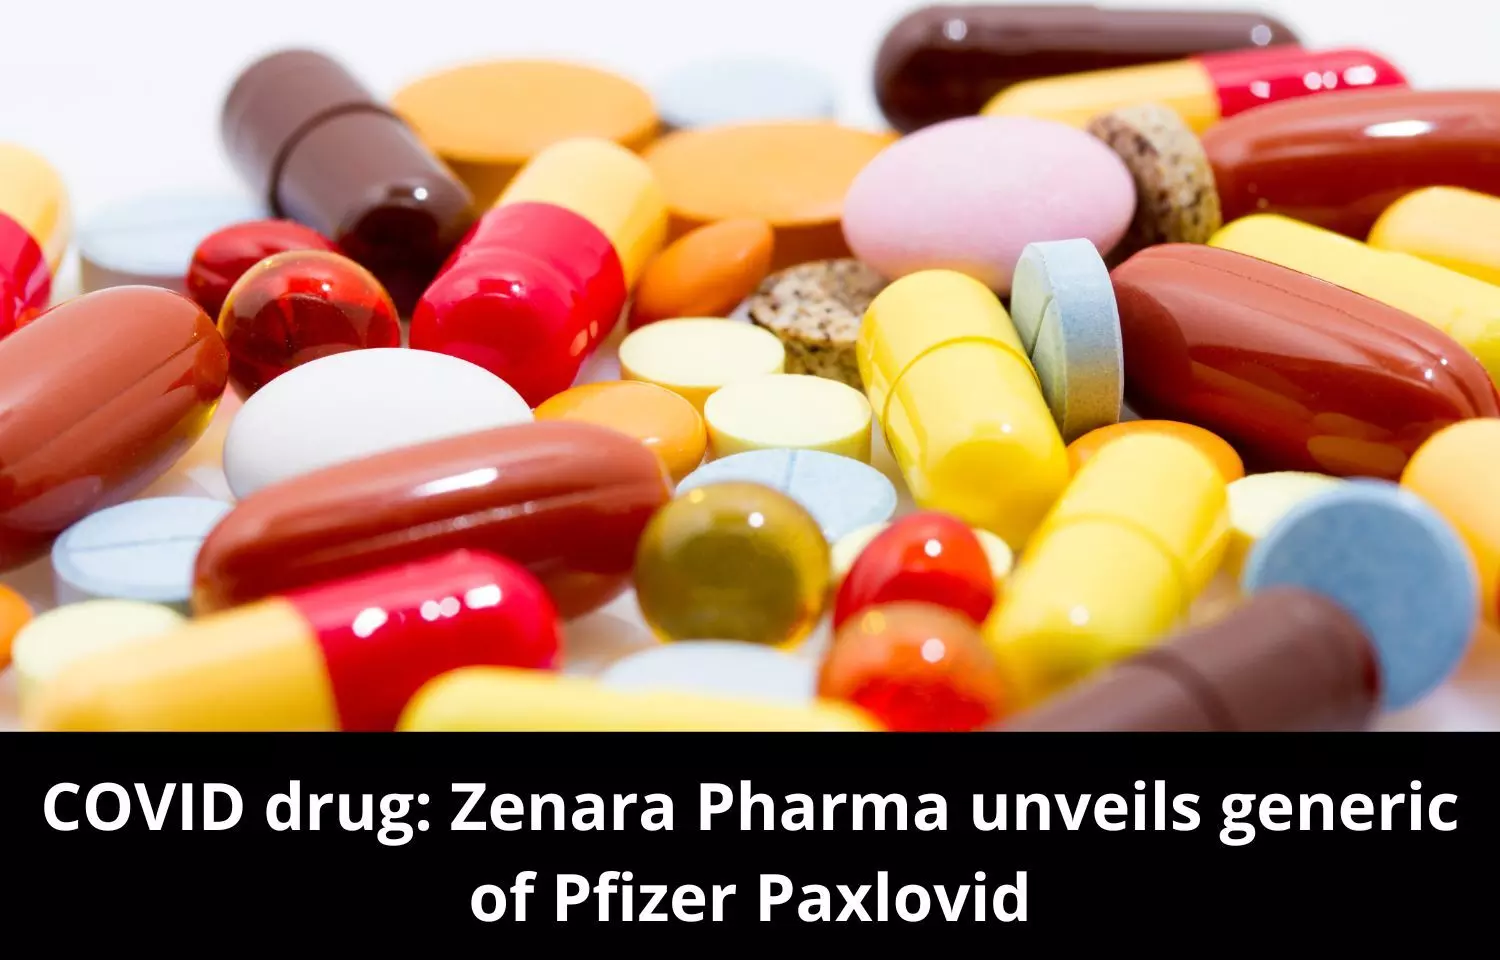 Zenara Pharma launches generic of Pfizer Paxlovid at Rs 5,200 per box in India